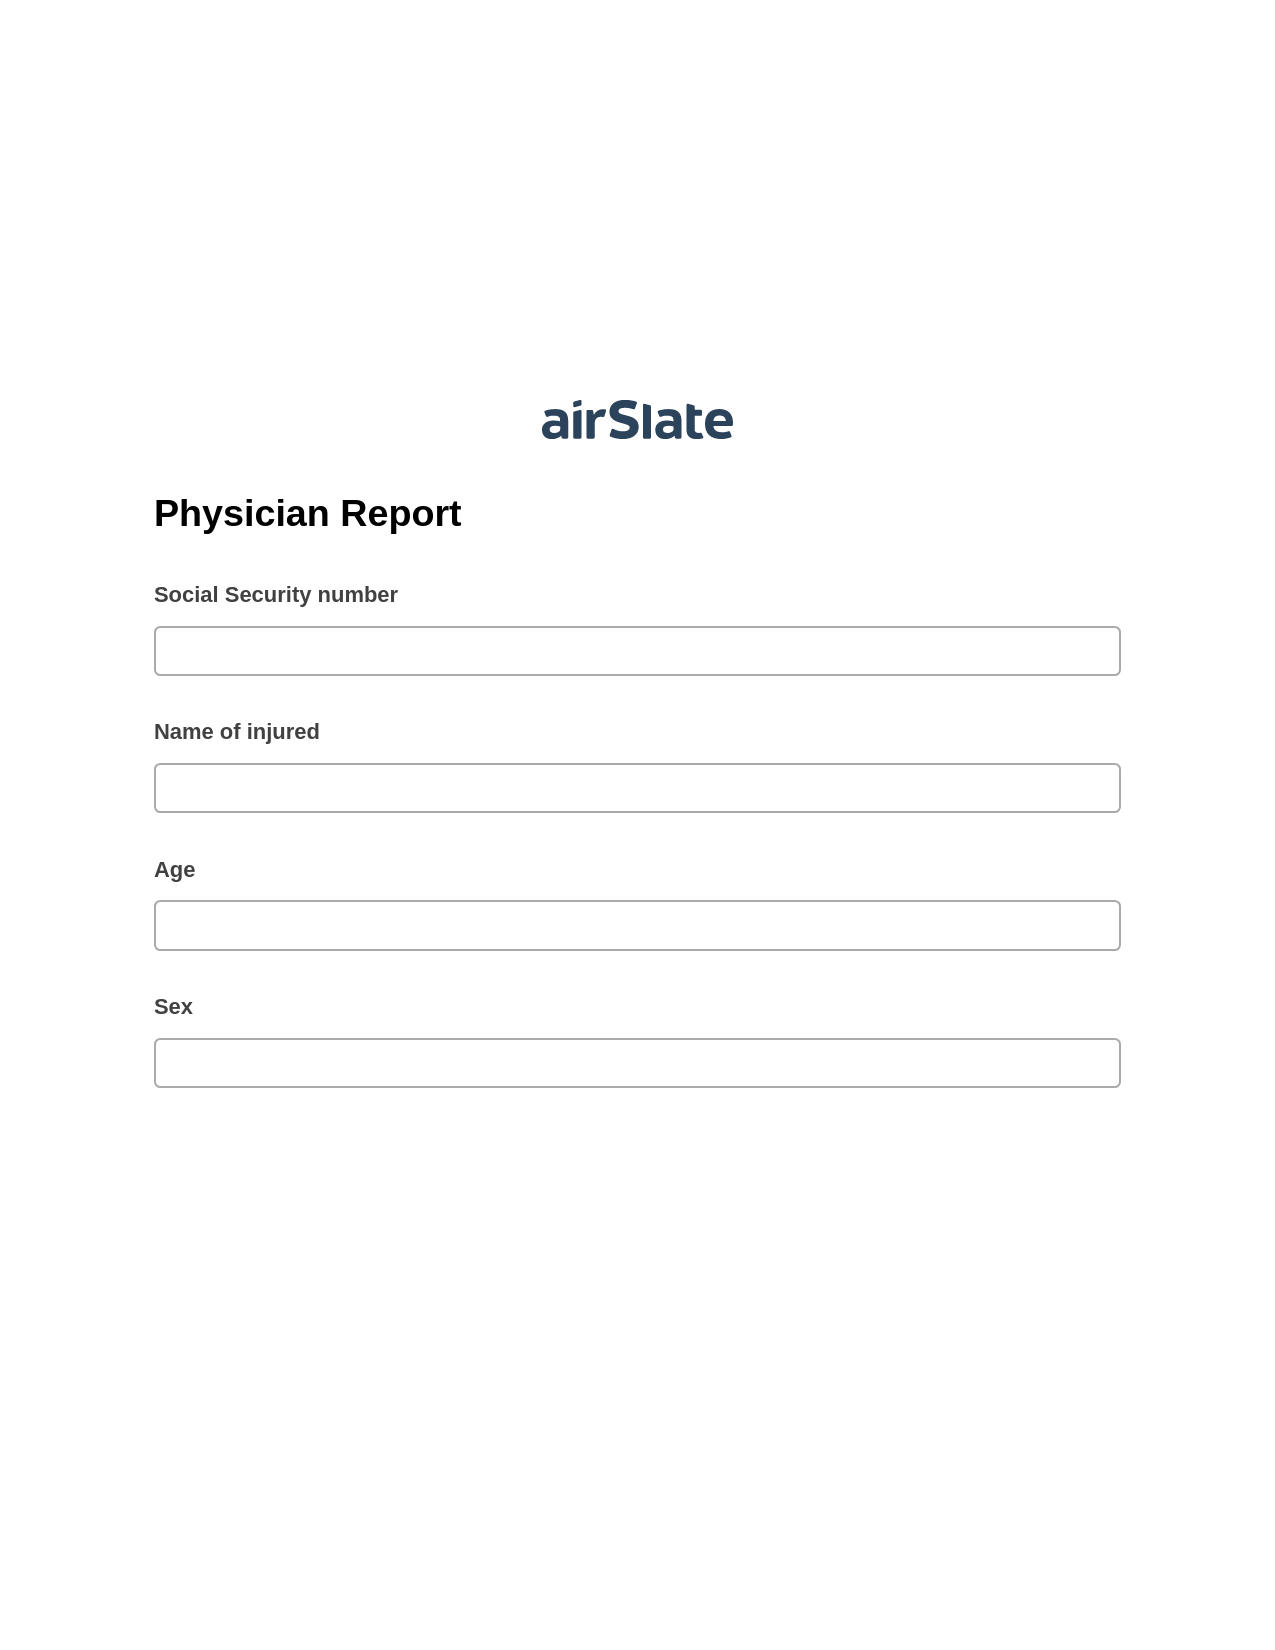 Physician Report Pre-fill from MySQL Bot, Invoke Salesforce Process Bot, Export to Smartsheet